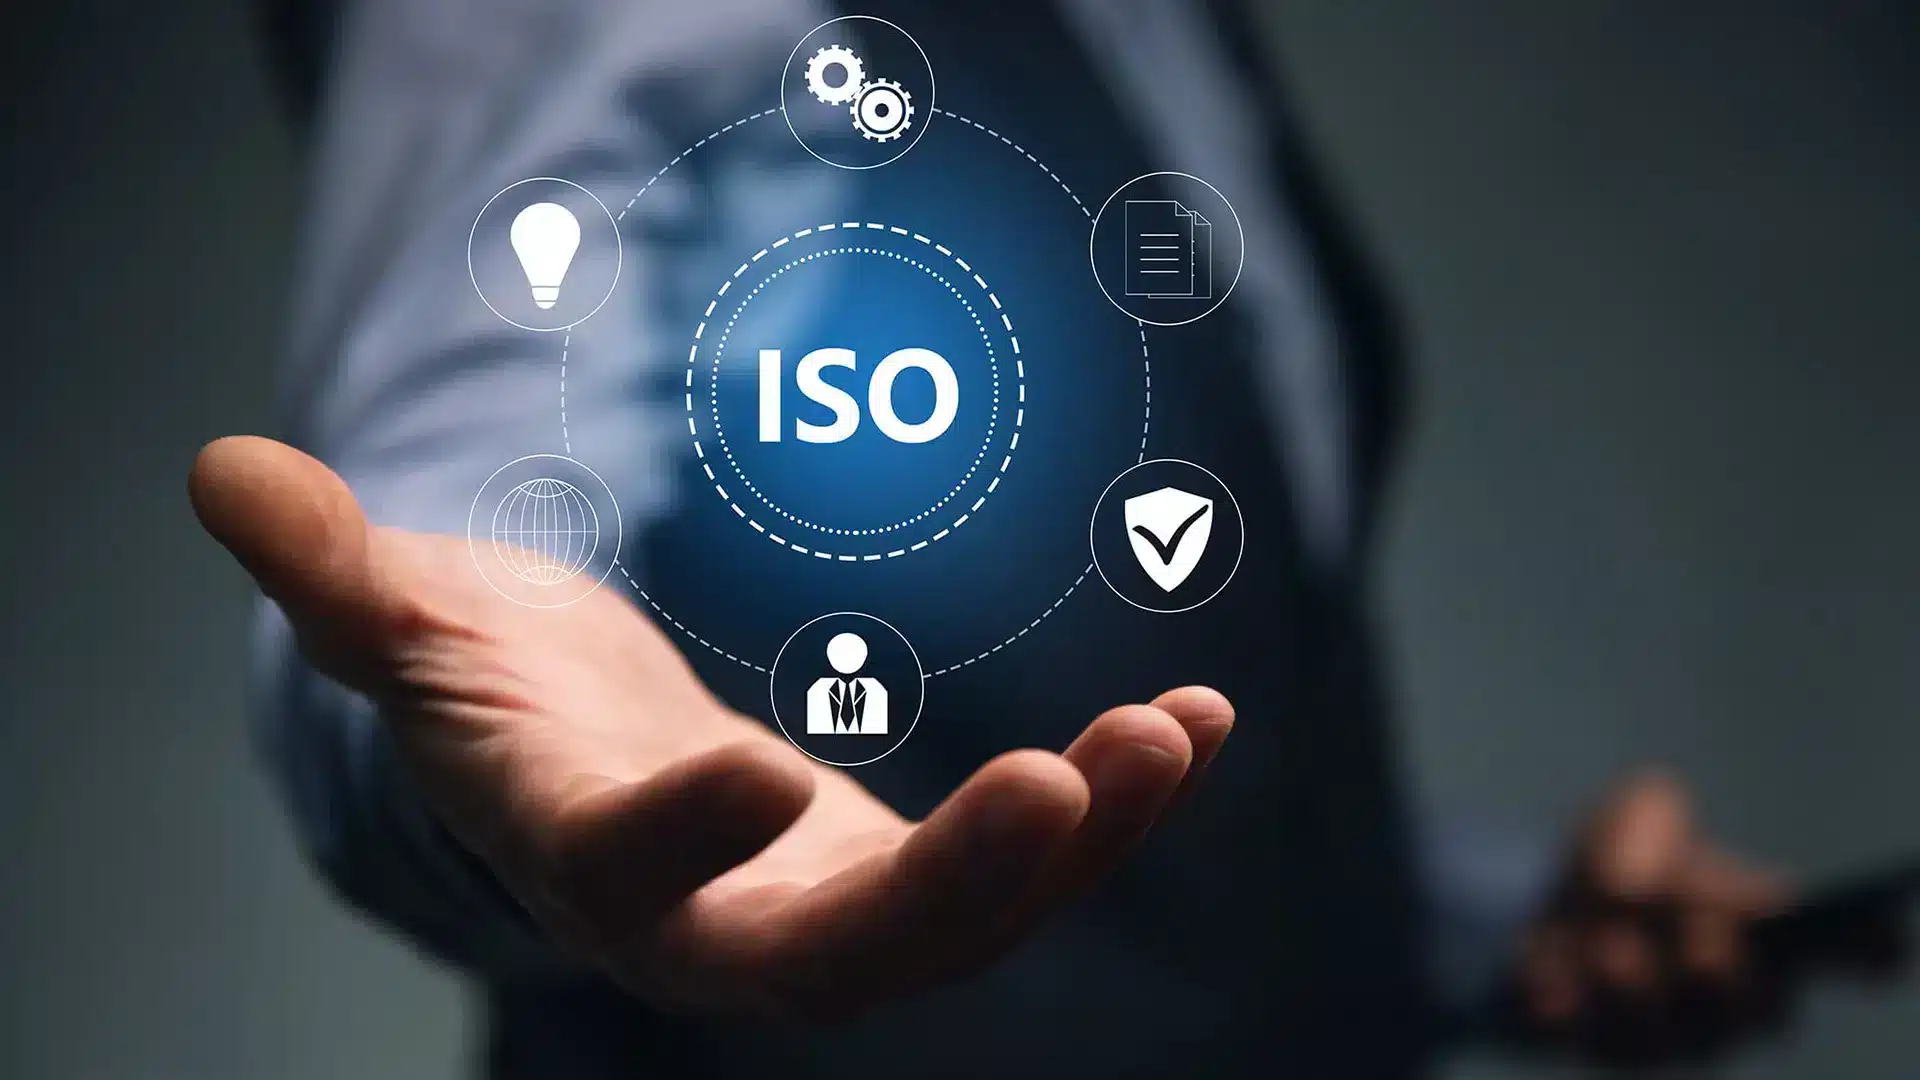 Lire la suite à propos de l’article Πιστοποίηση ISO: Οφέλη και στάδια εφαρμογής του